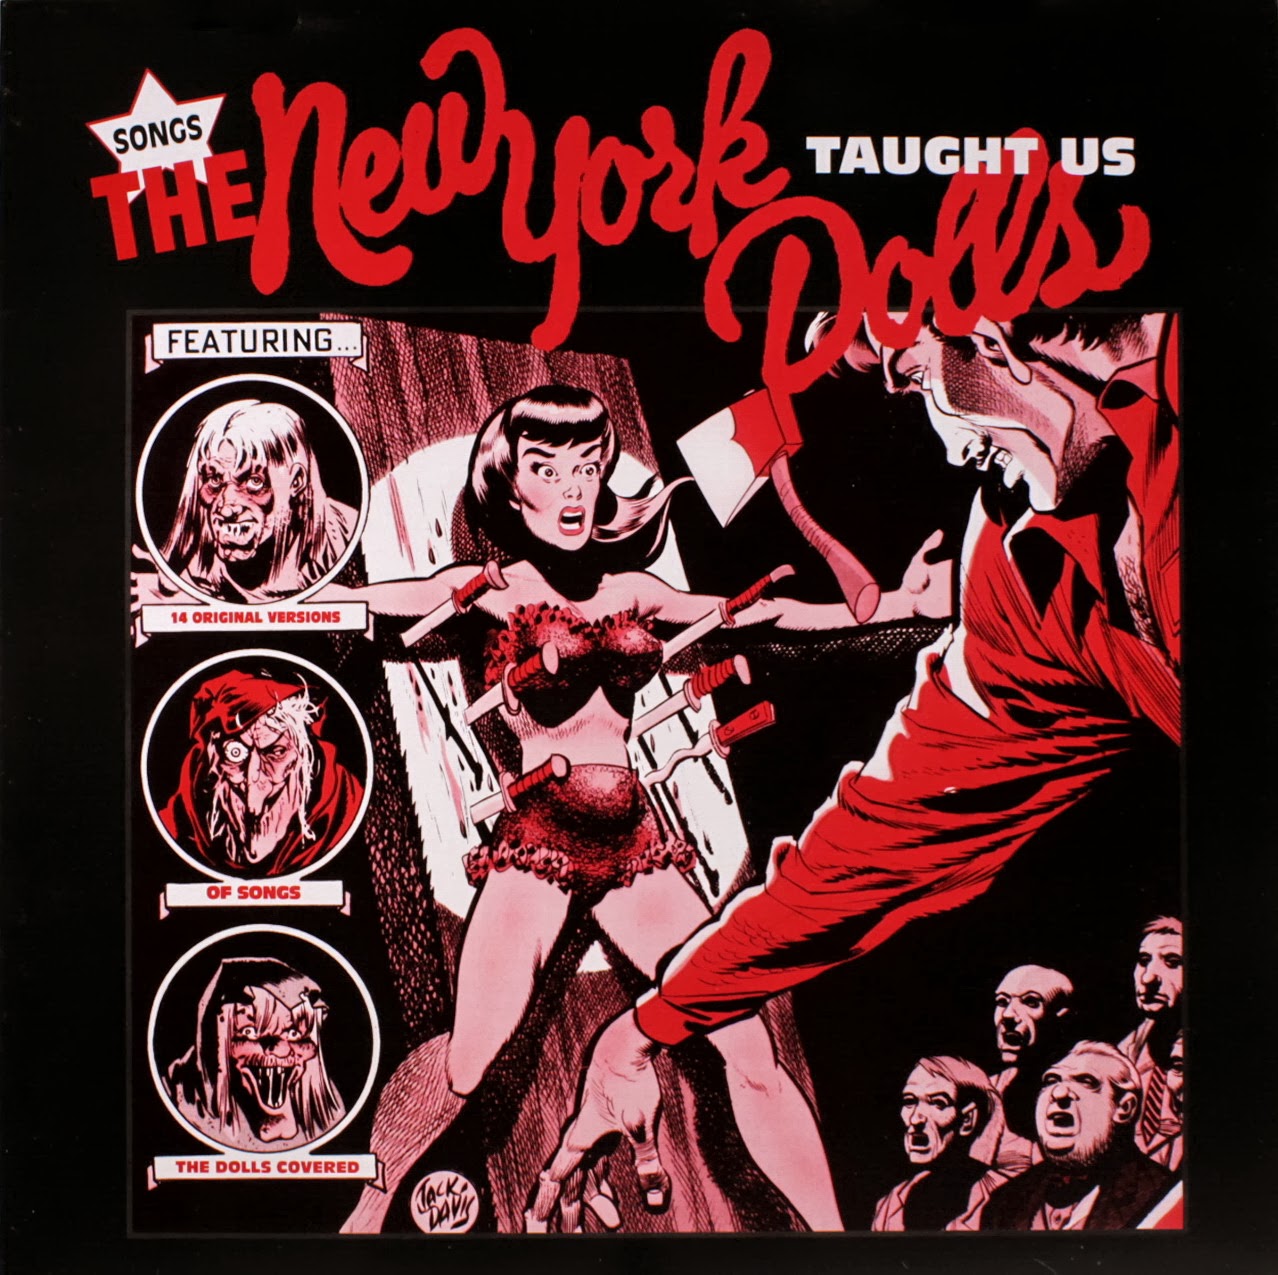 Looking For A Kiss: semana New York Dolls en Popuheads - Página 4 Songs%2BThe%2BNew%2BYork%2BDolls%2BTaught%2BUs%2B1